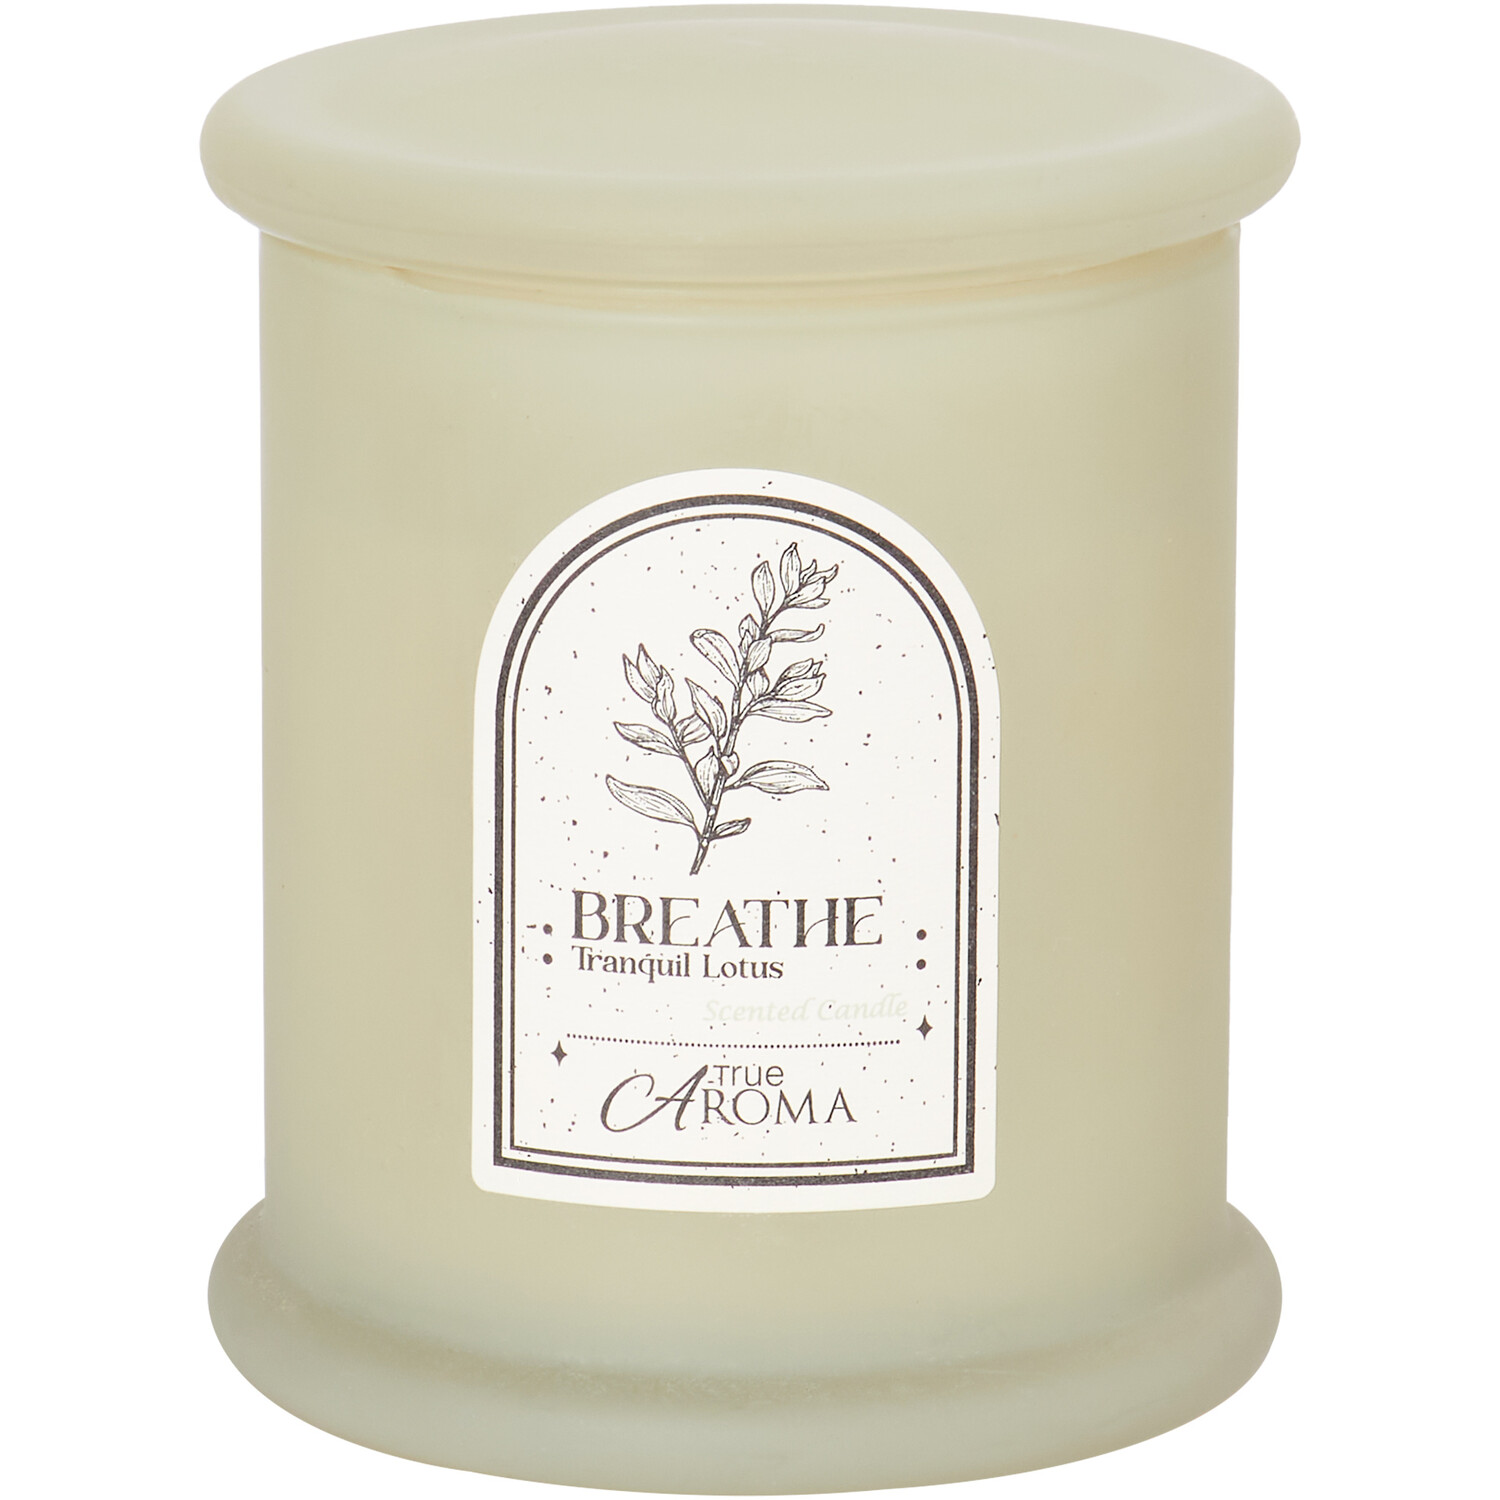 Breathe Jar Candle - Cream Image 1